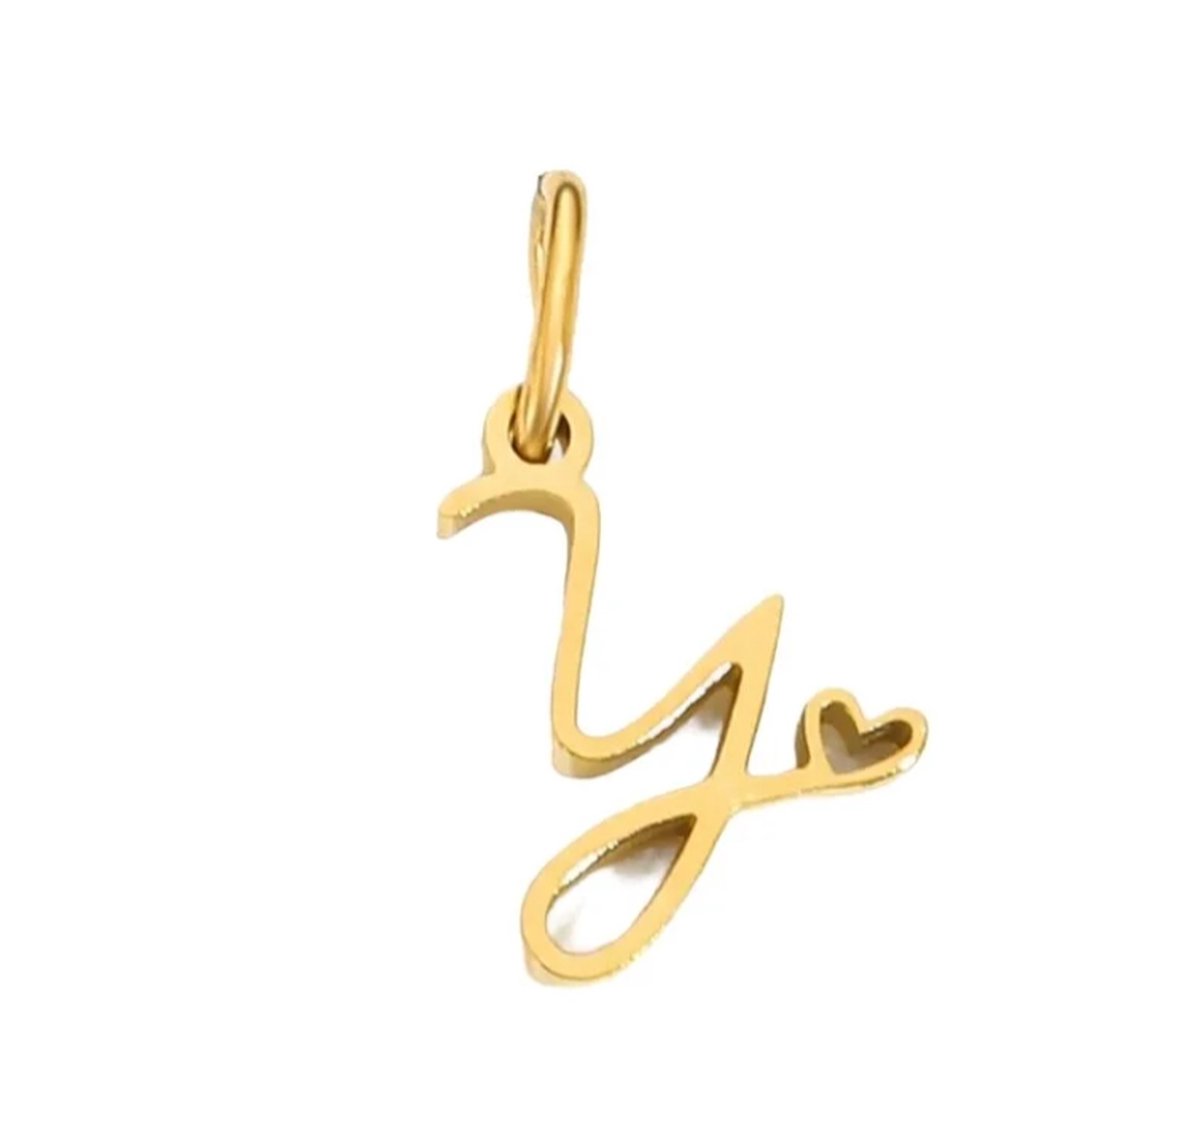 Letter hanger - Y - letter - charm - goud kleur - stainless steel - verkleurt niet - perfect cadeau - valentijn - verjaardag - dierbare